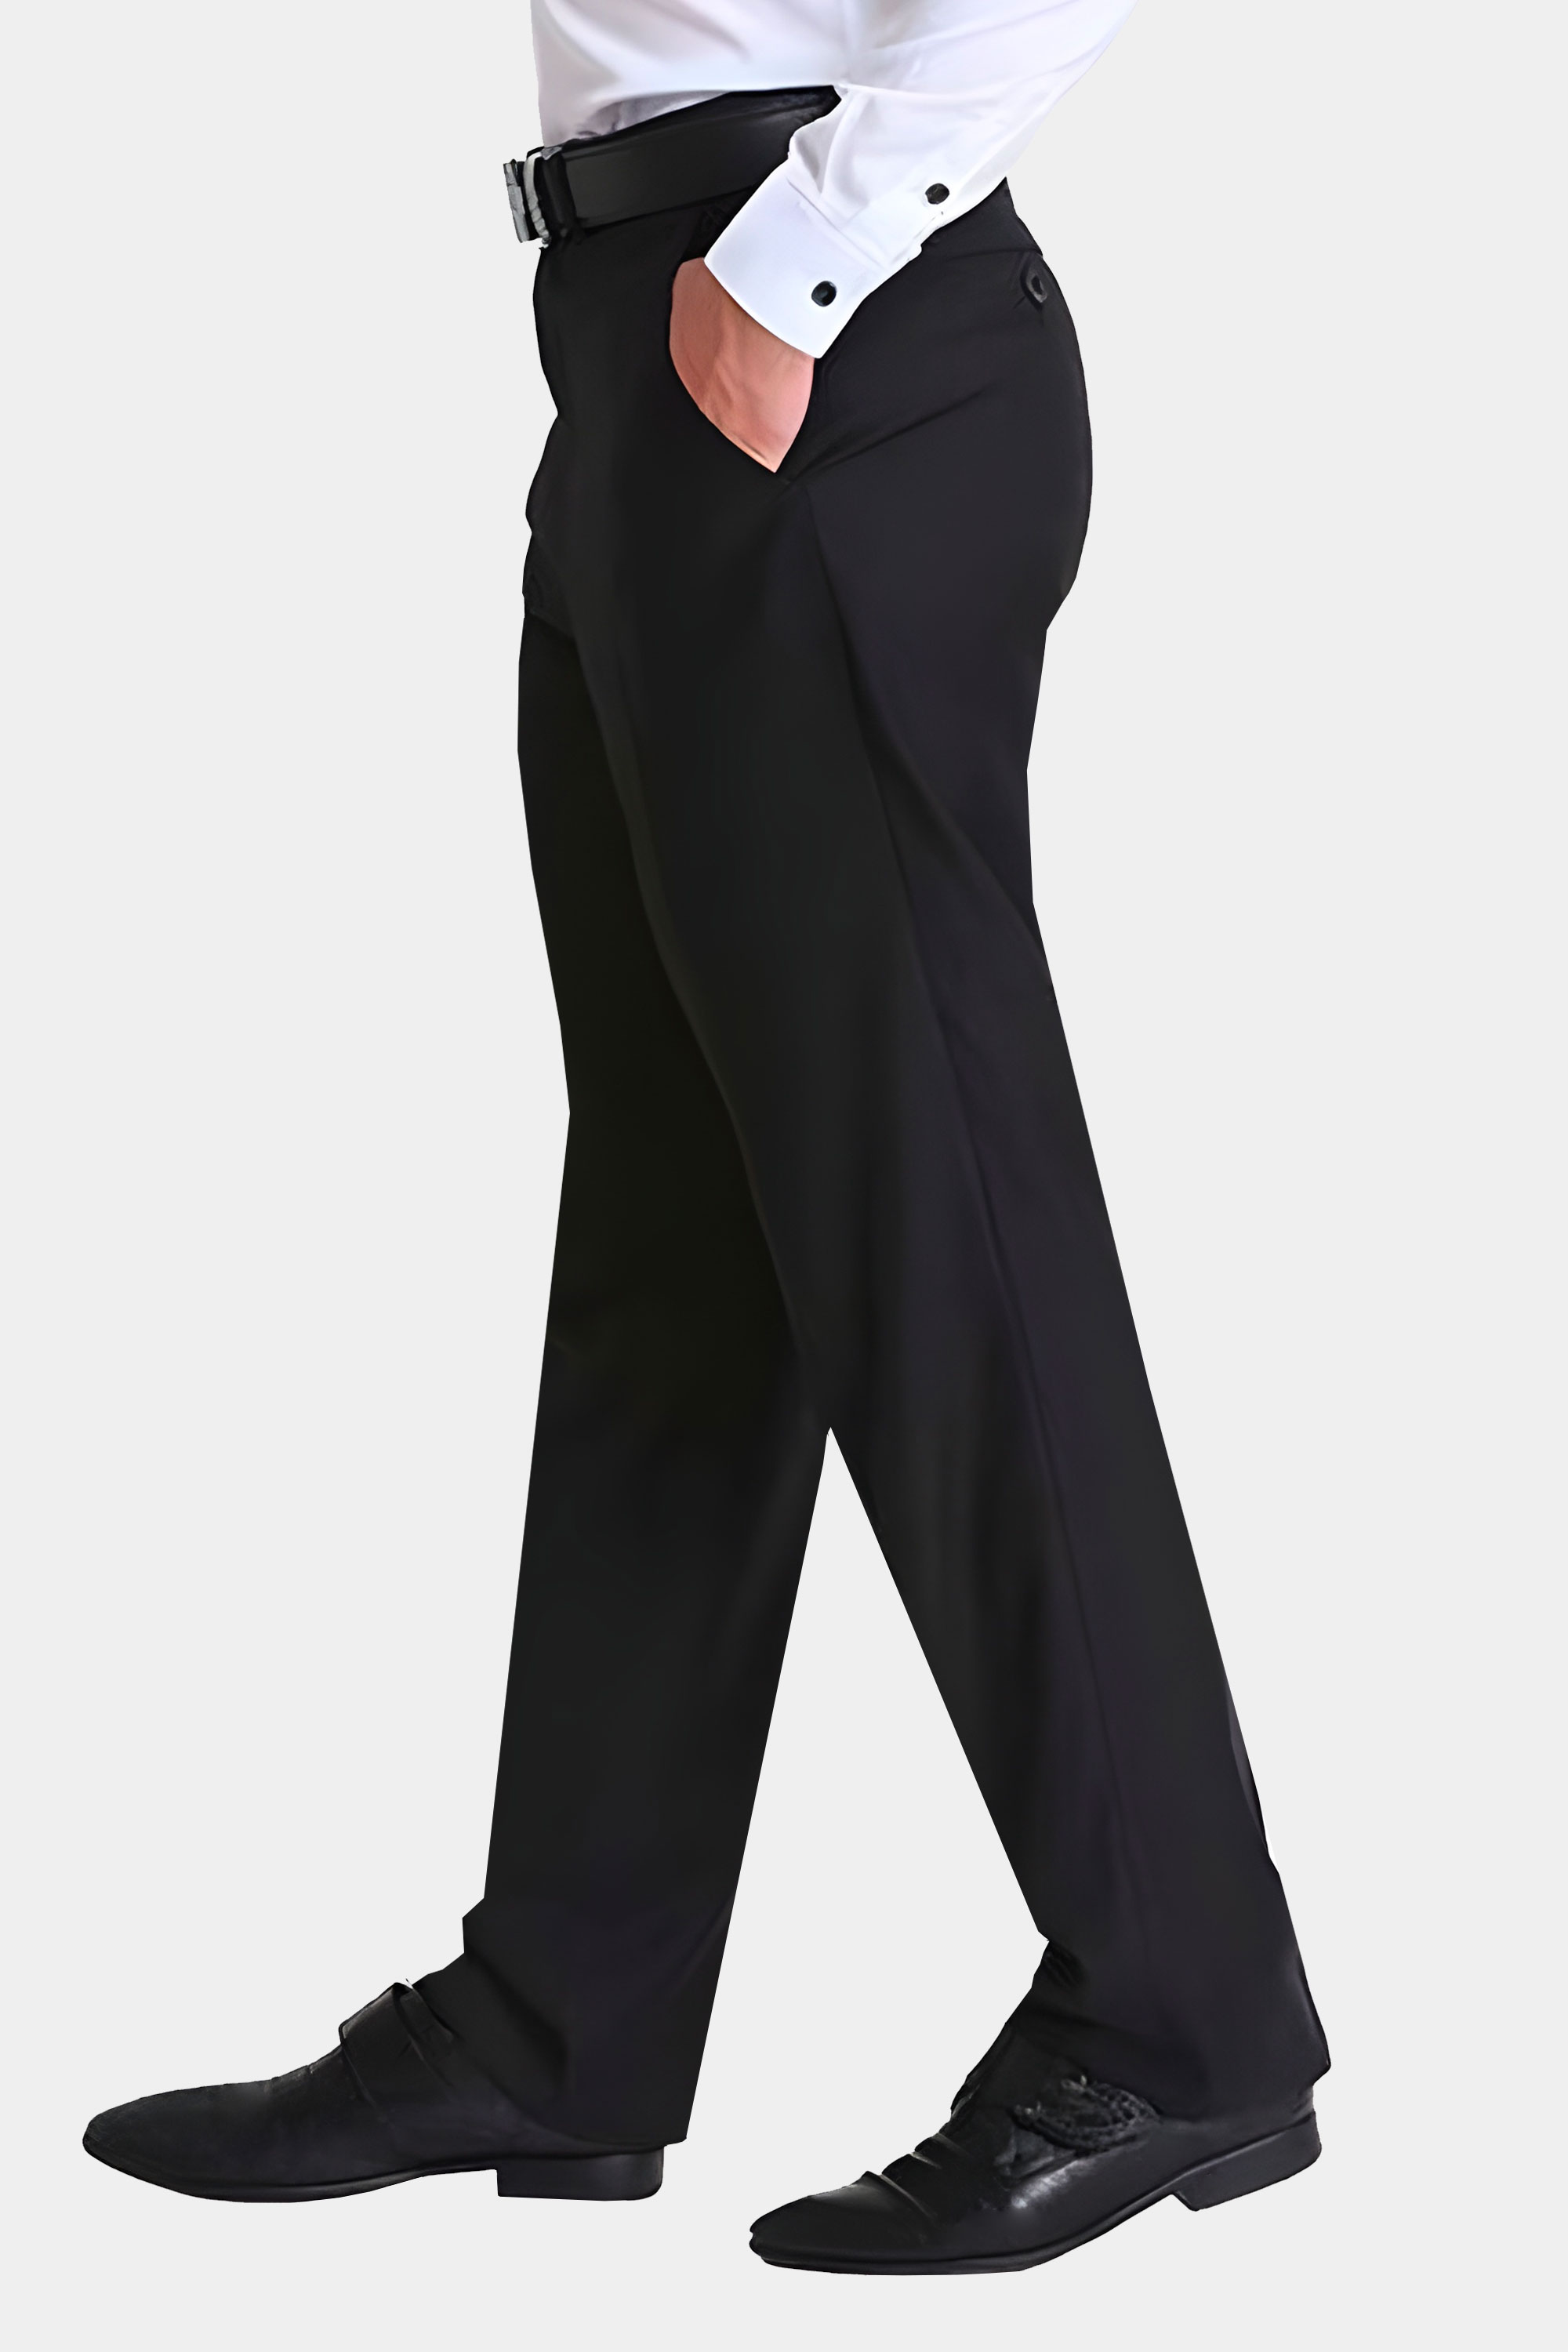 Formal Black Dress Pants